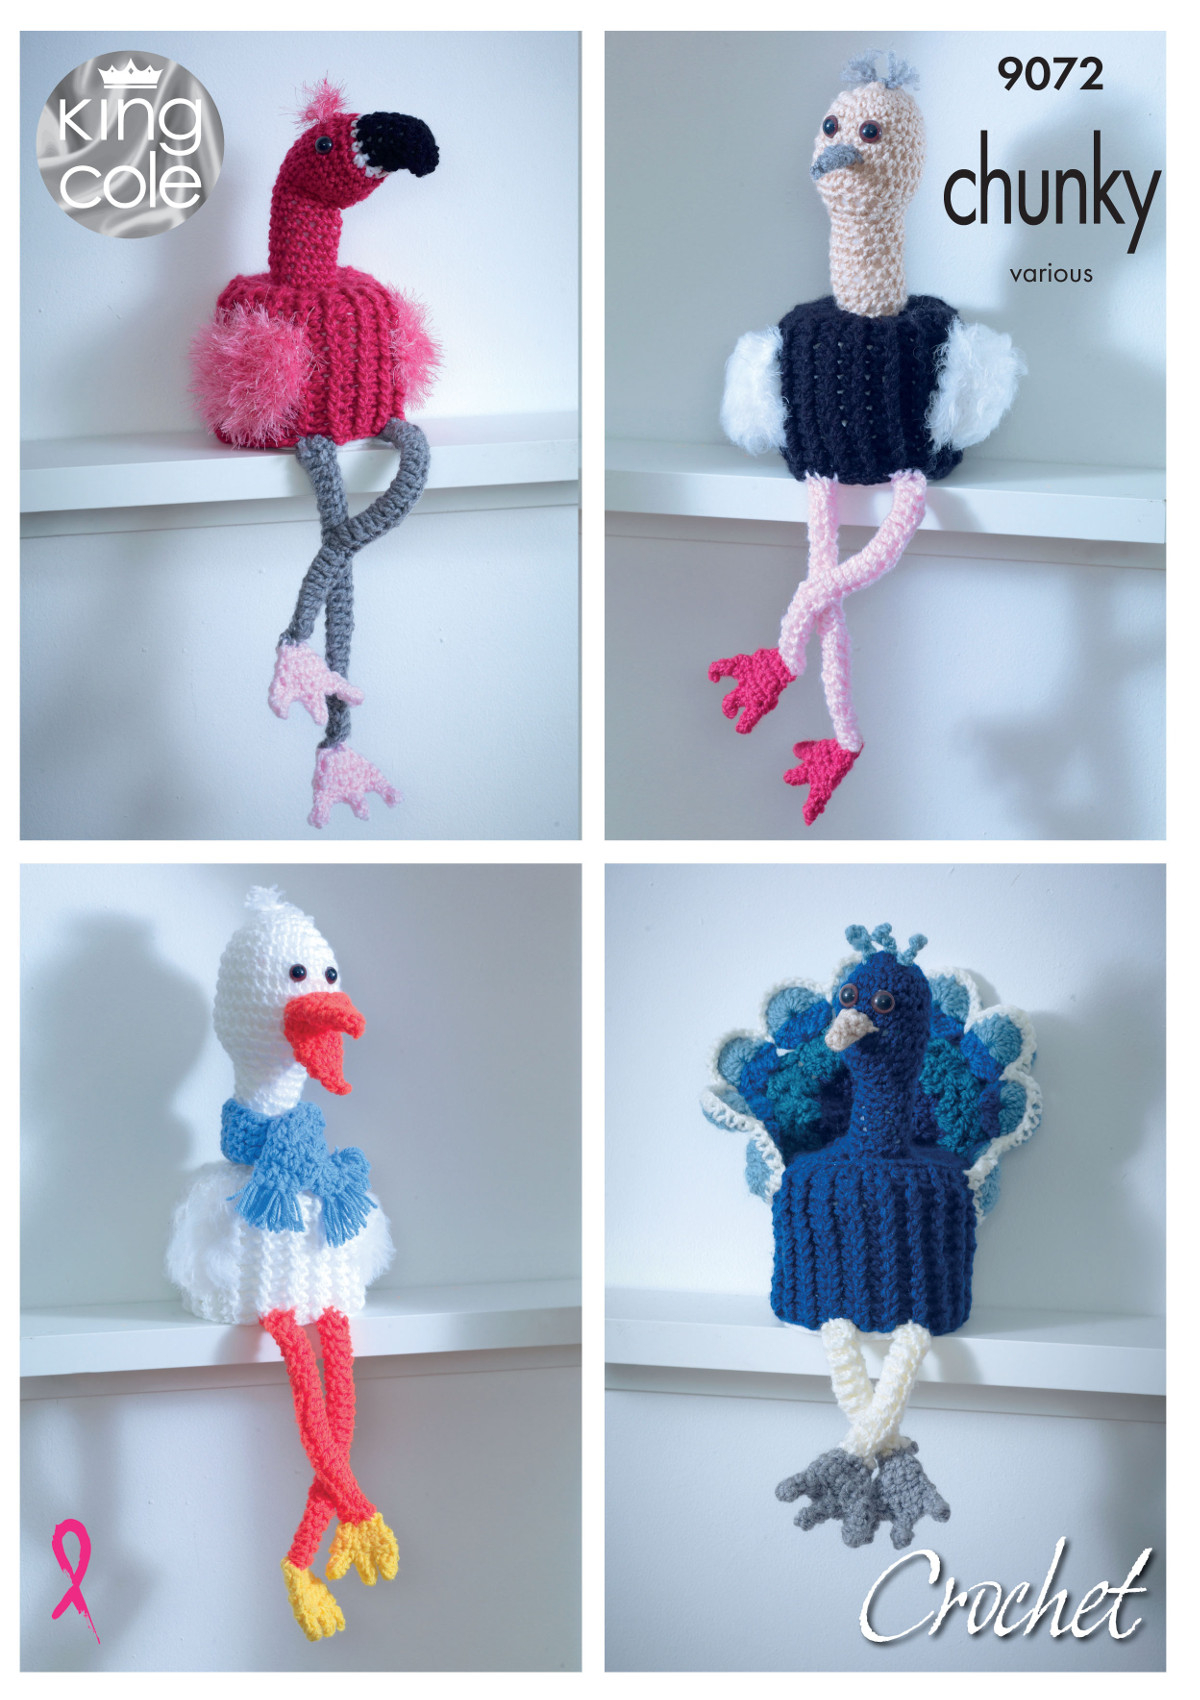 Crochet Holder Pattern King Cole Crochet Pattern Toilet Roll Holder Flamingo Ostrich Stork